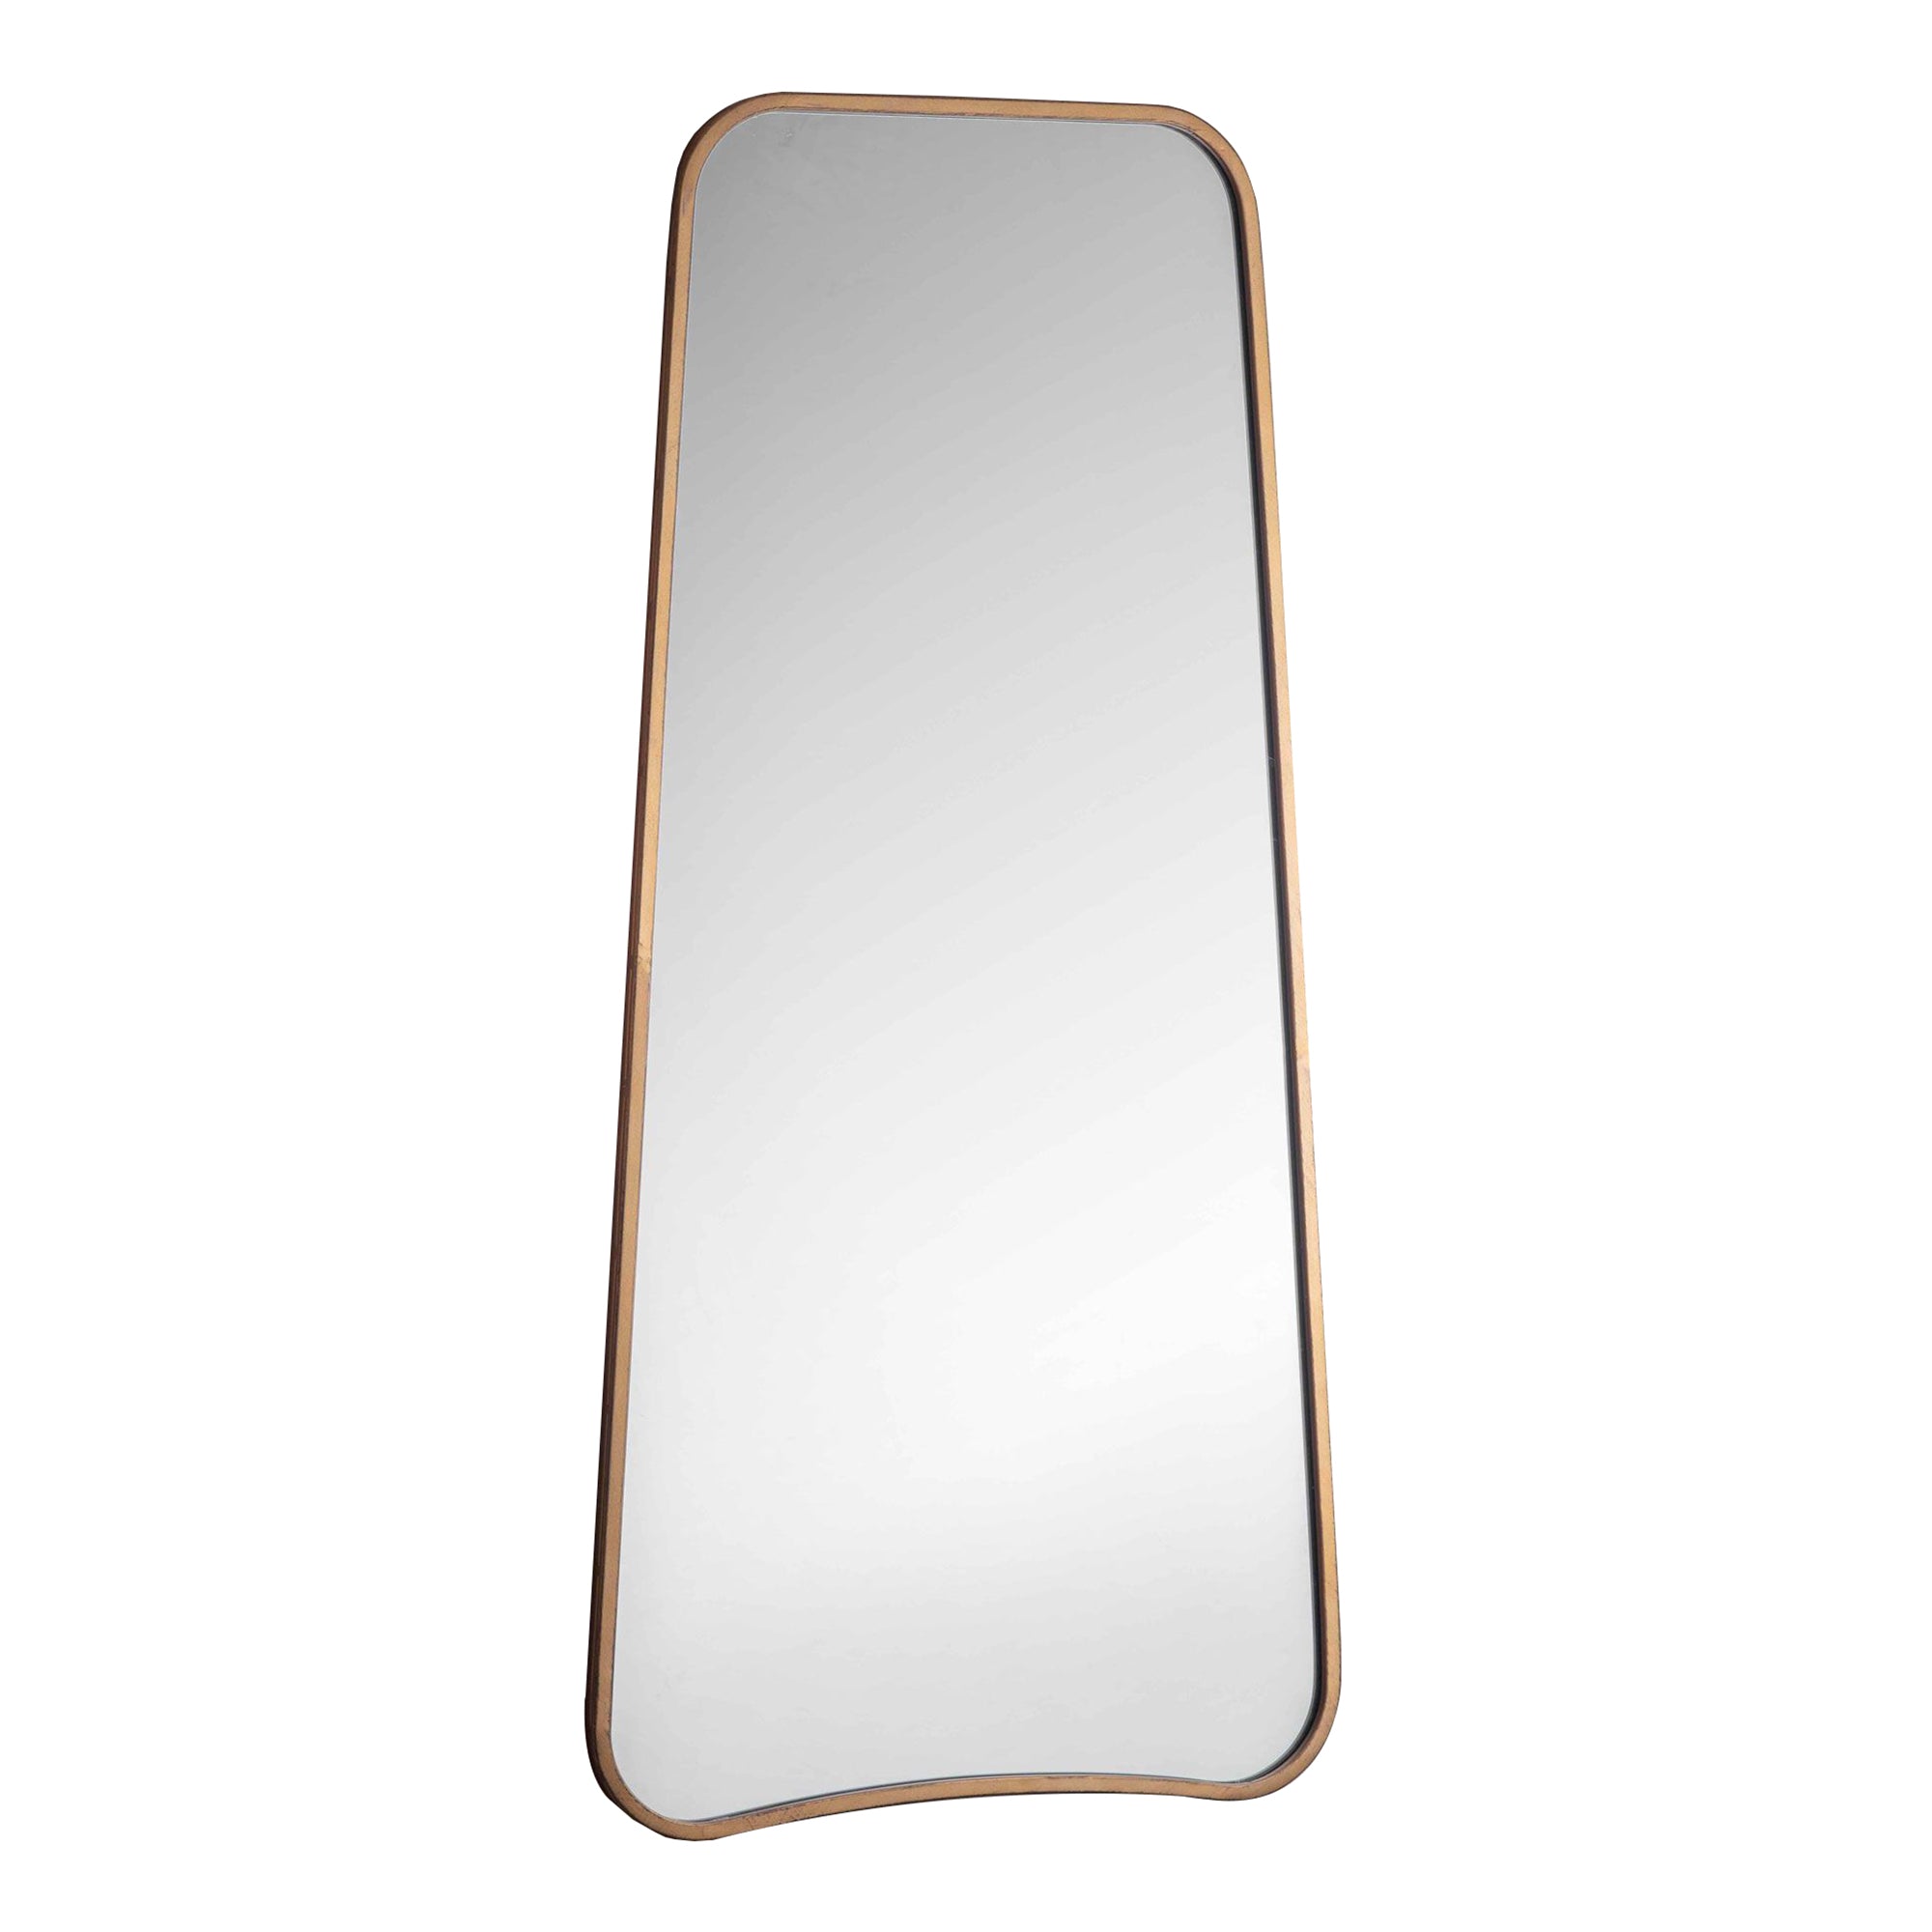 Epwell Gold Mirror